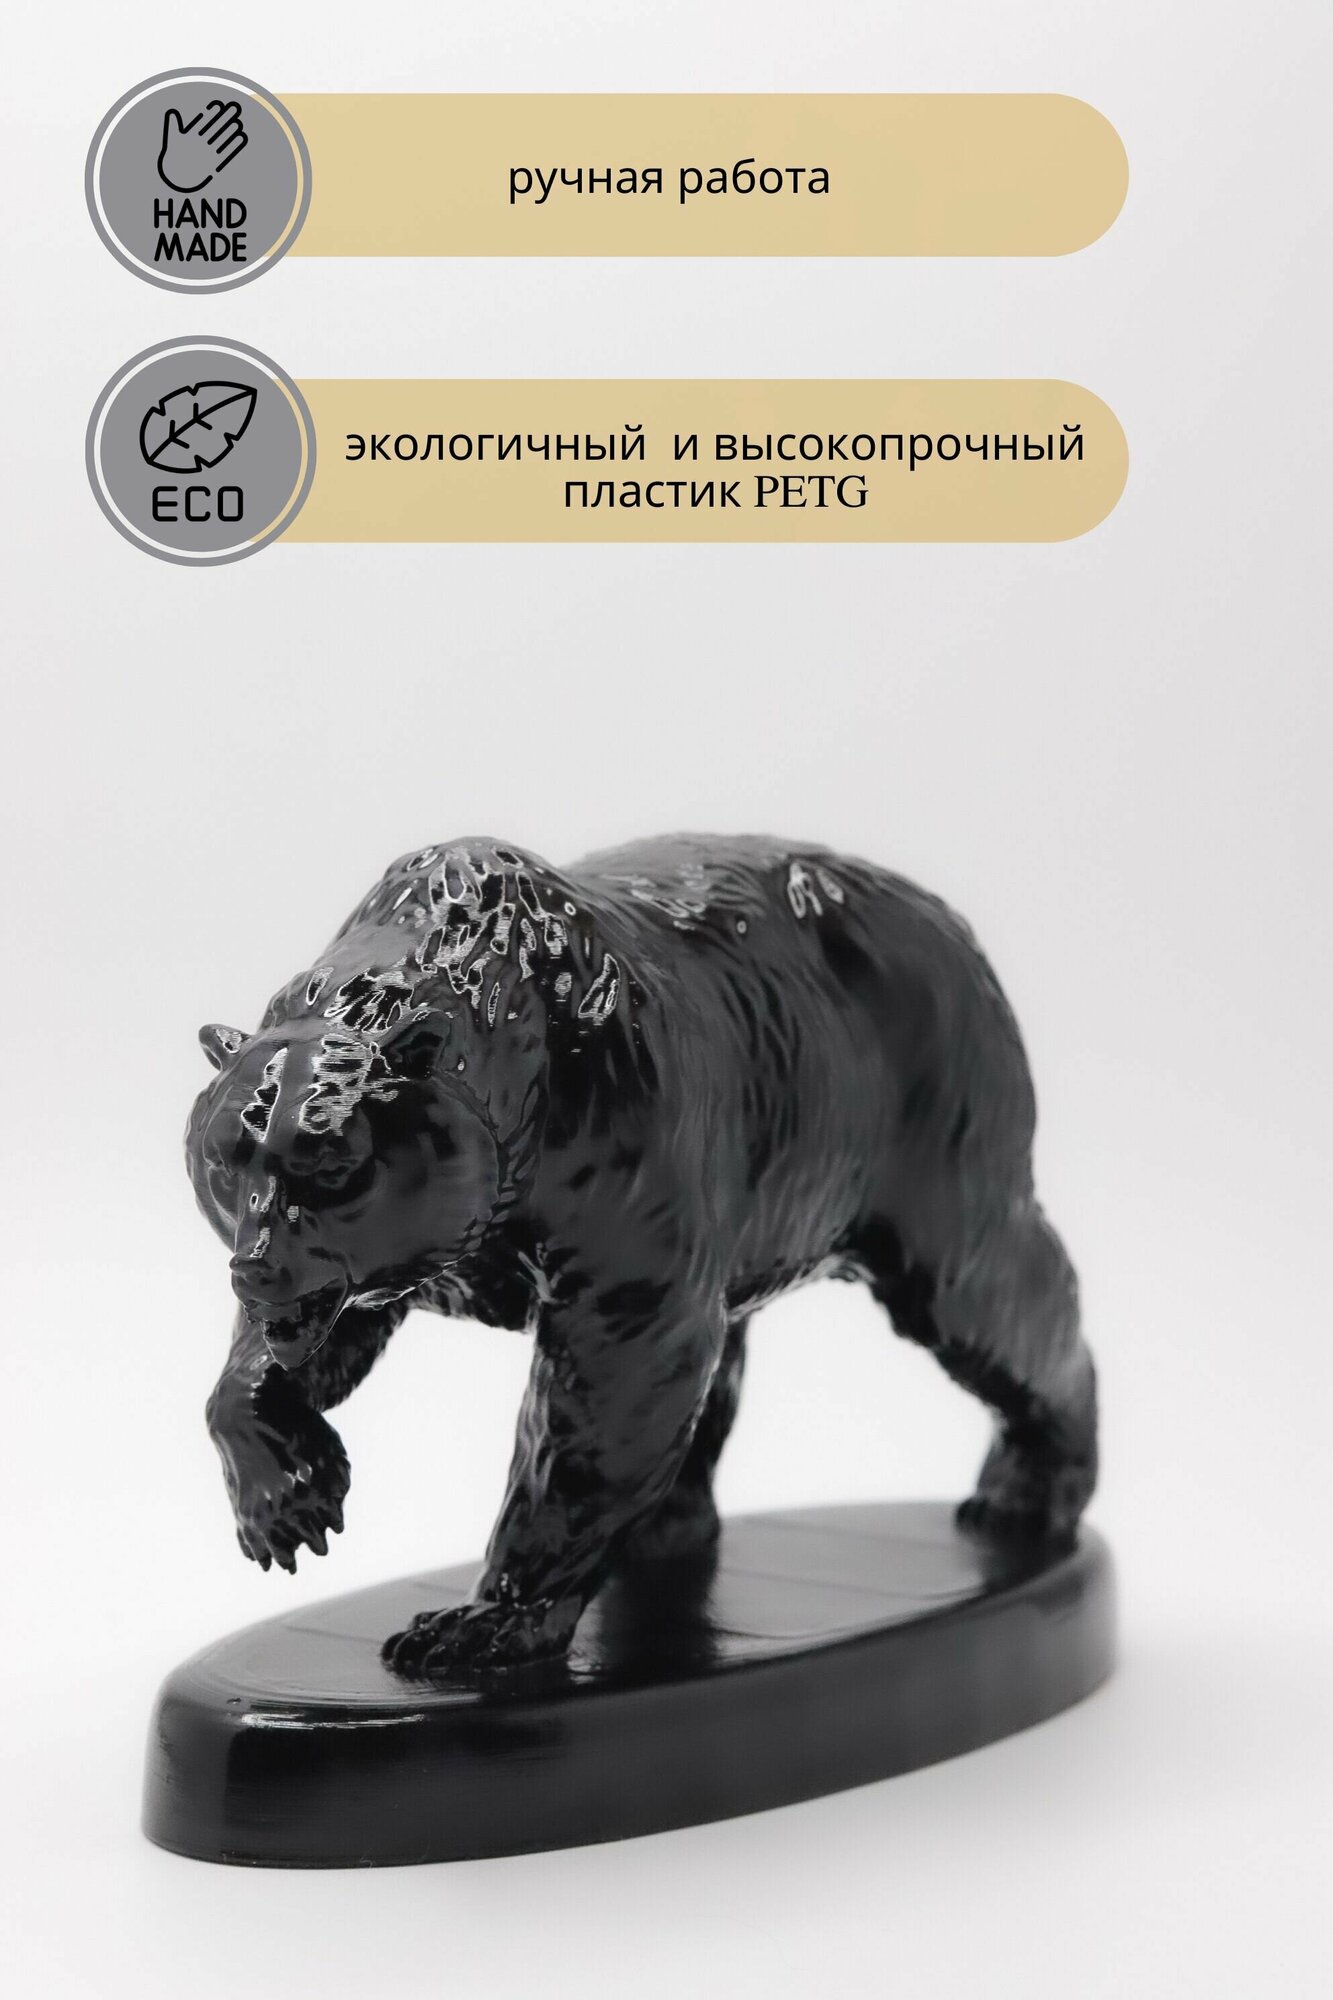 Медведь (bear) из пластика на капот